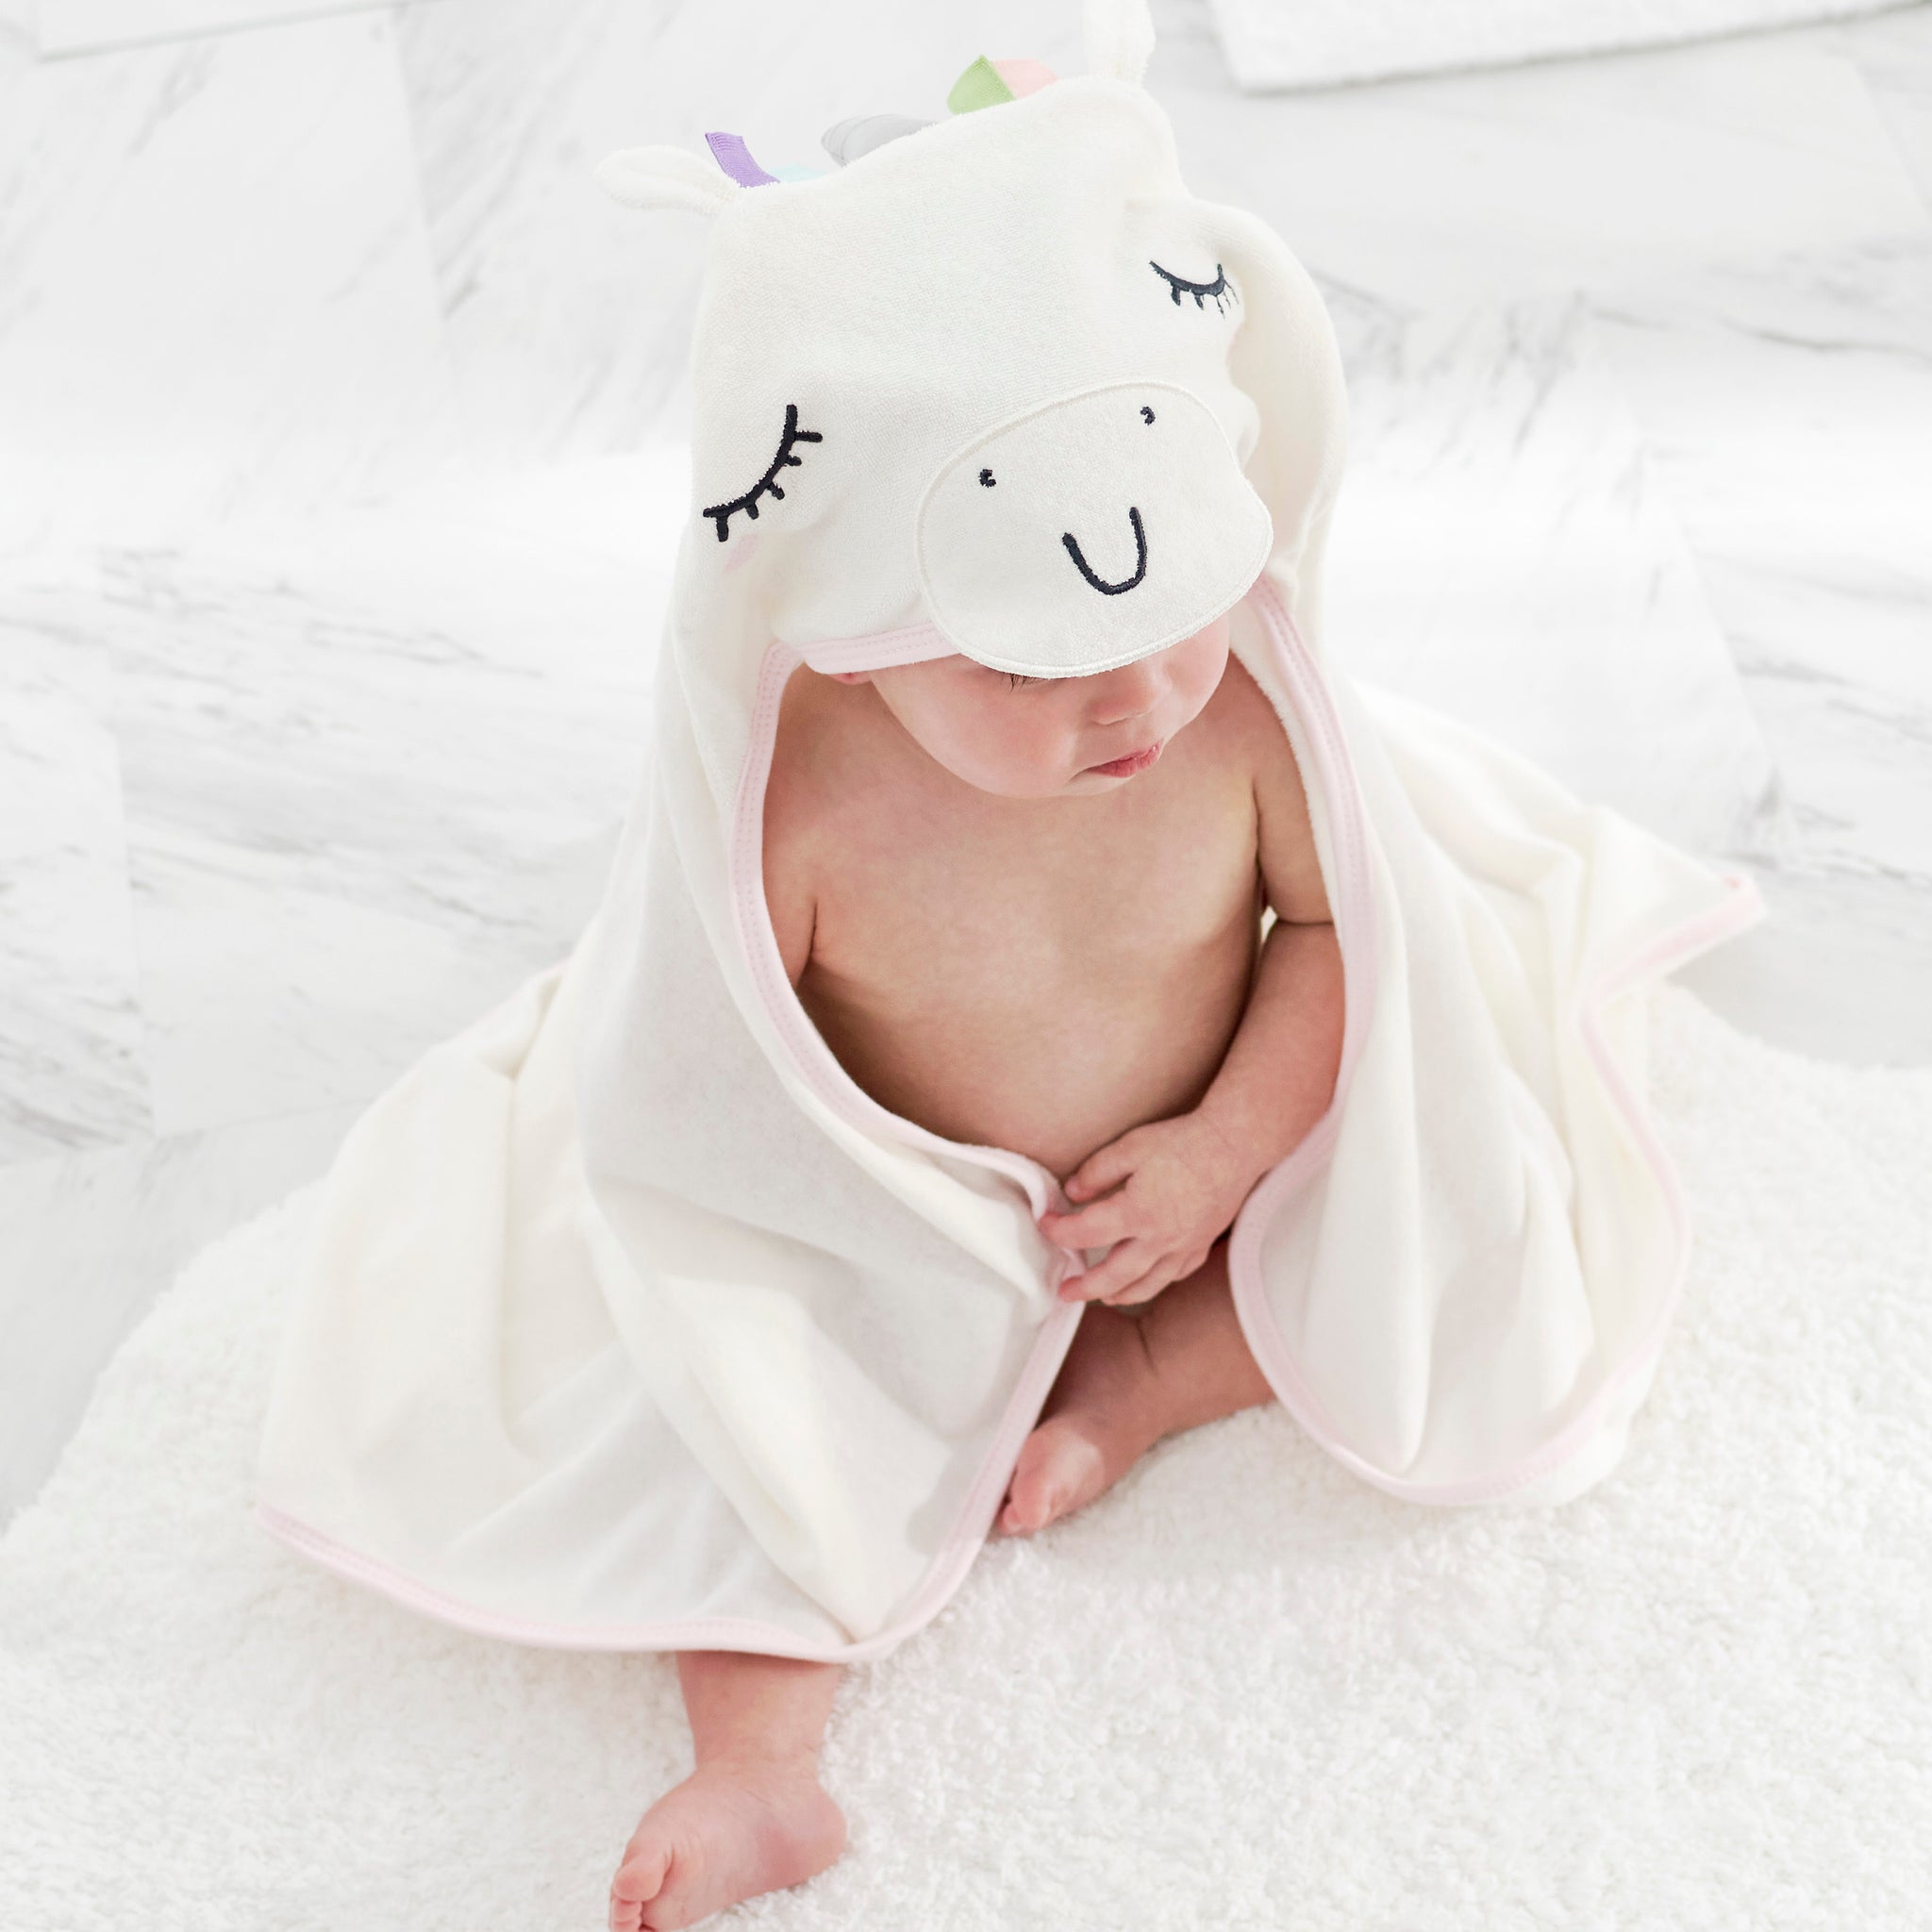 Organic Baby Girls Unicorn Hooded Bath Wrap-Gerber Childrenswear Wholesale